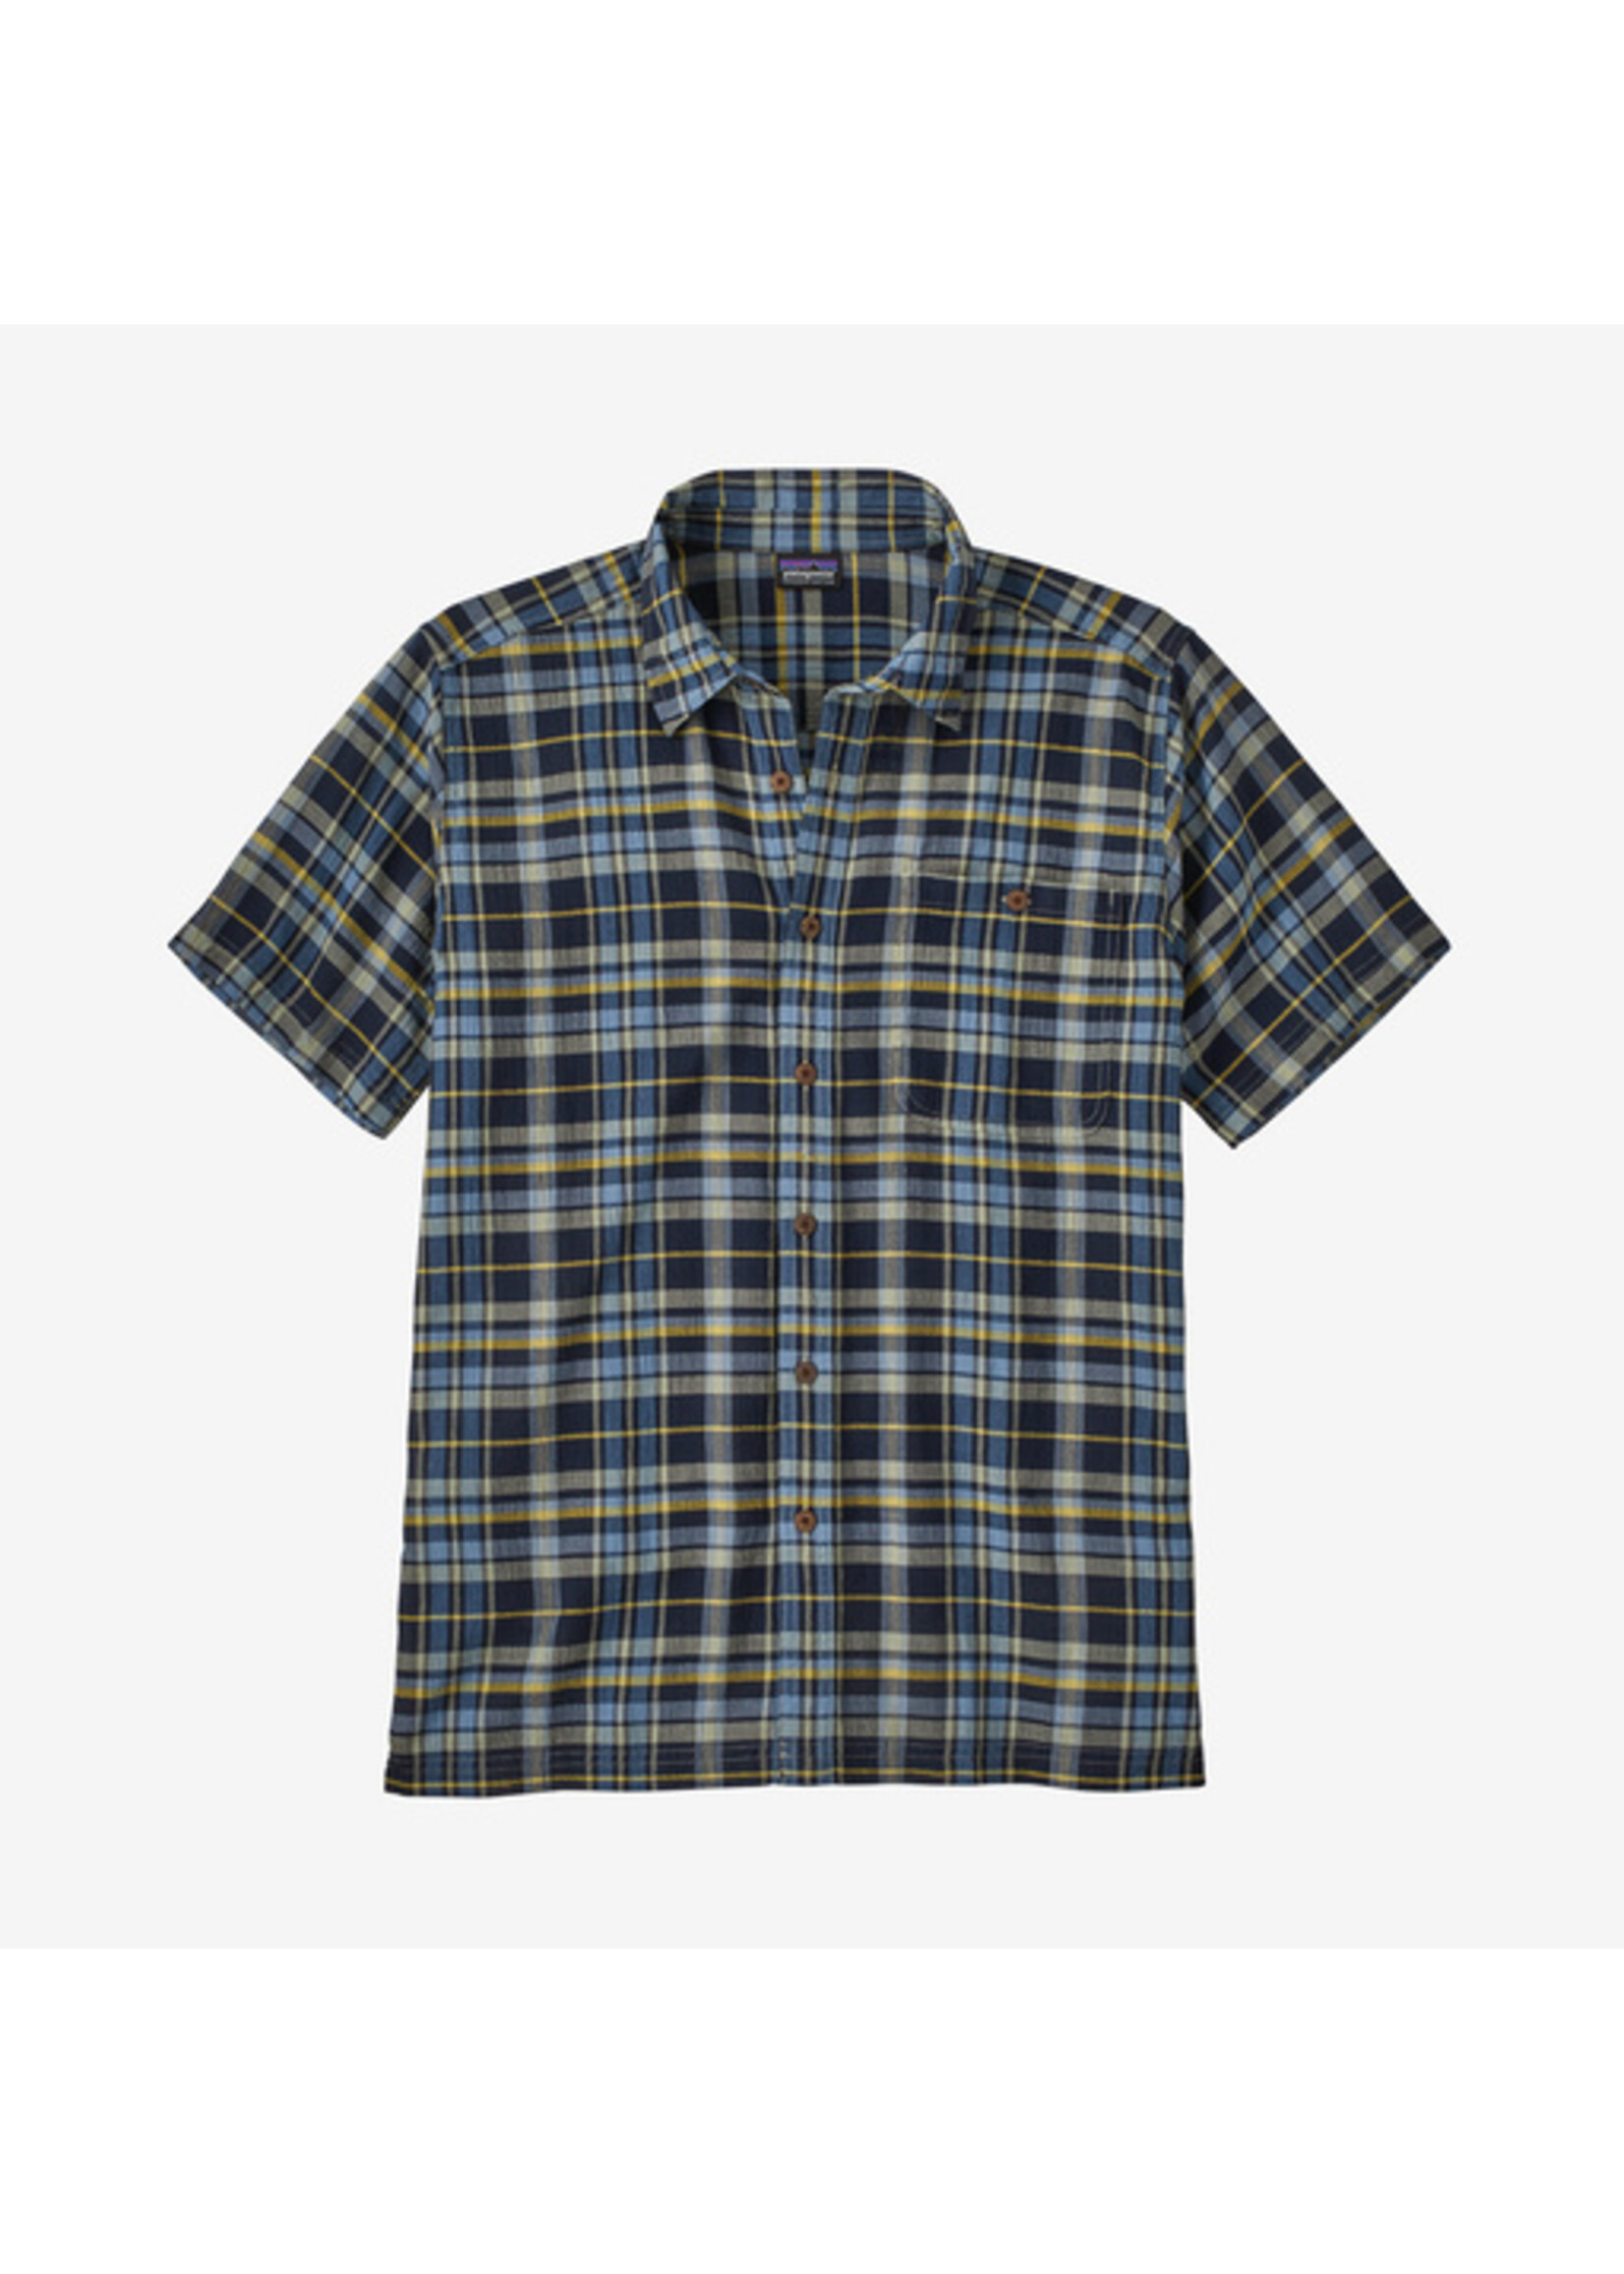 Patagonia Men's A/C Button Up Shirt - Paint Plaid: Tidepool Blue